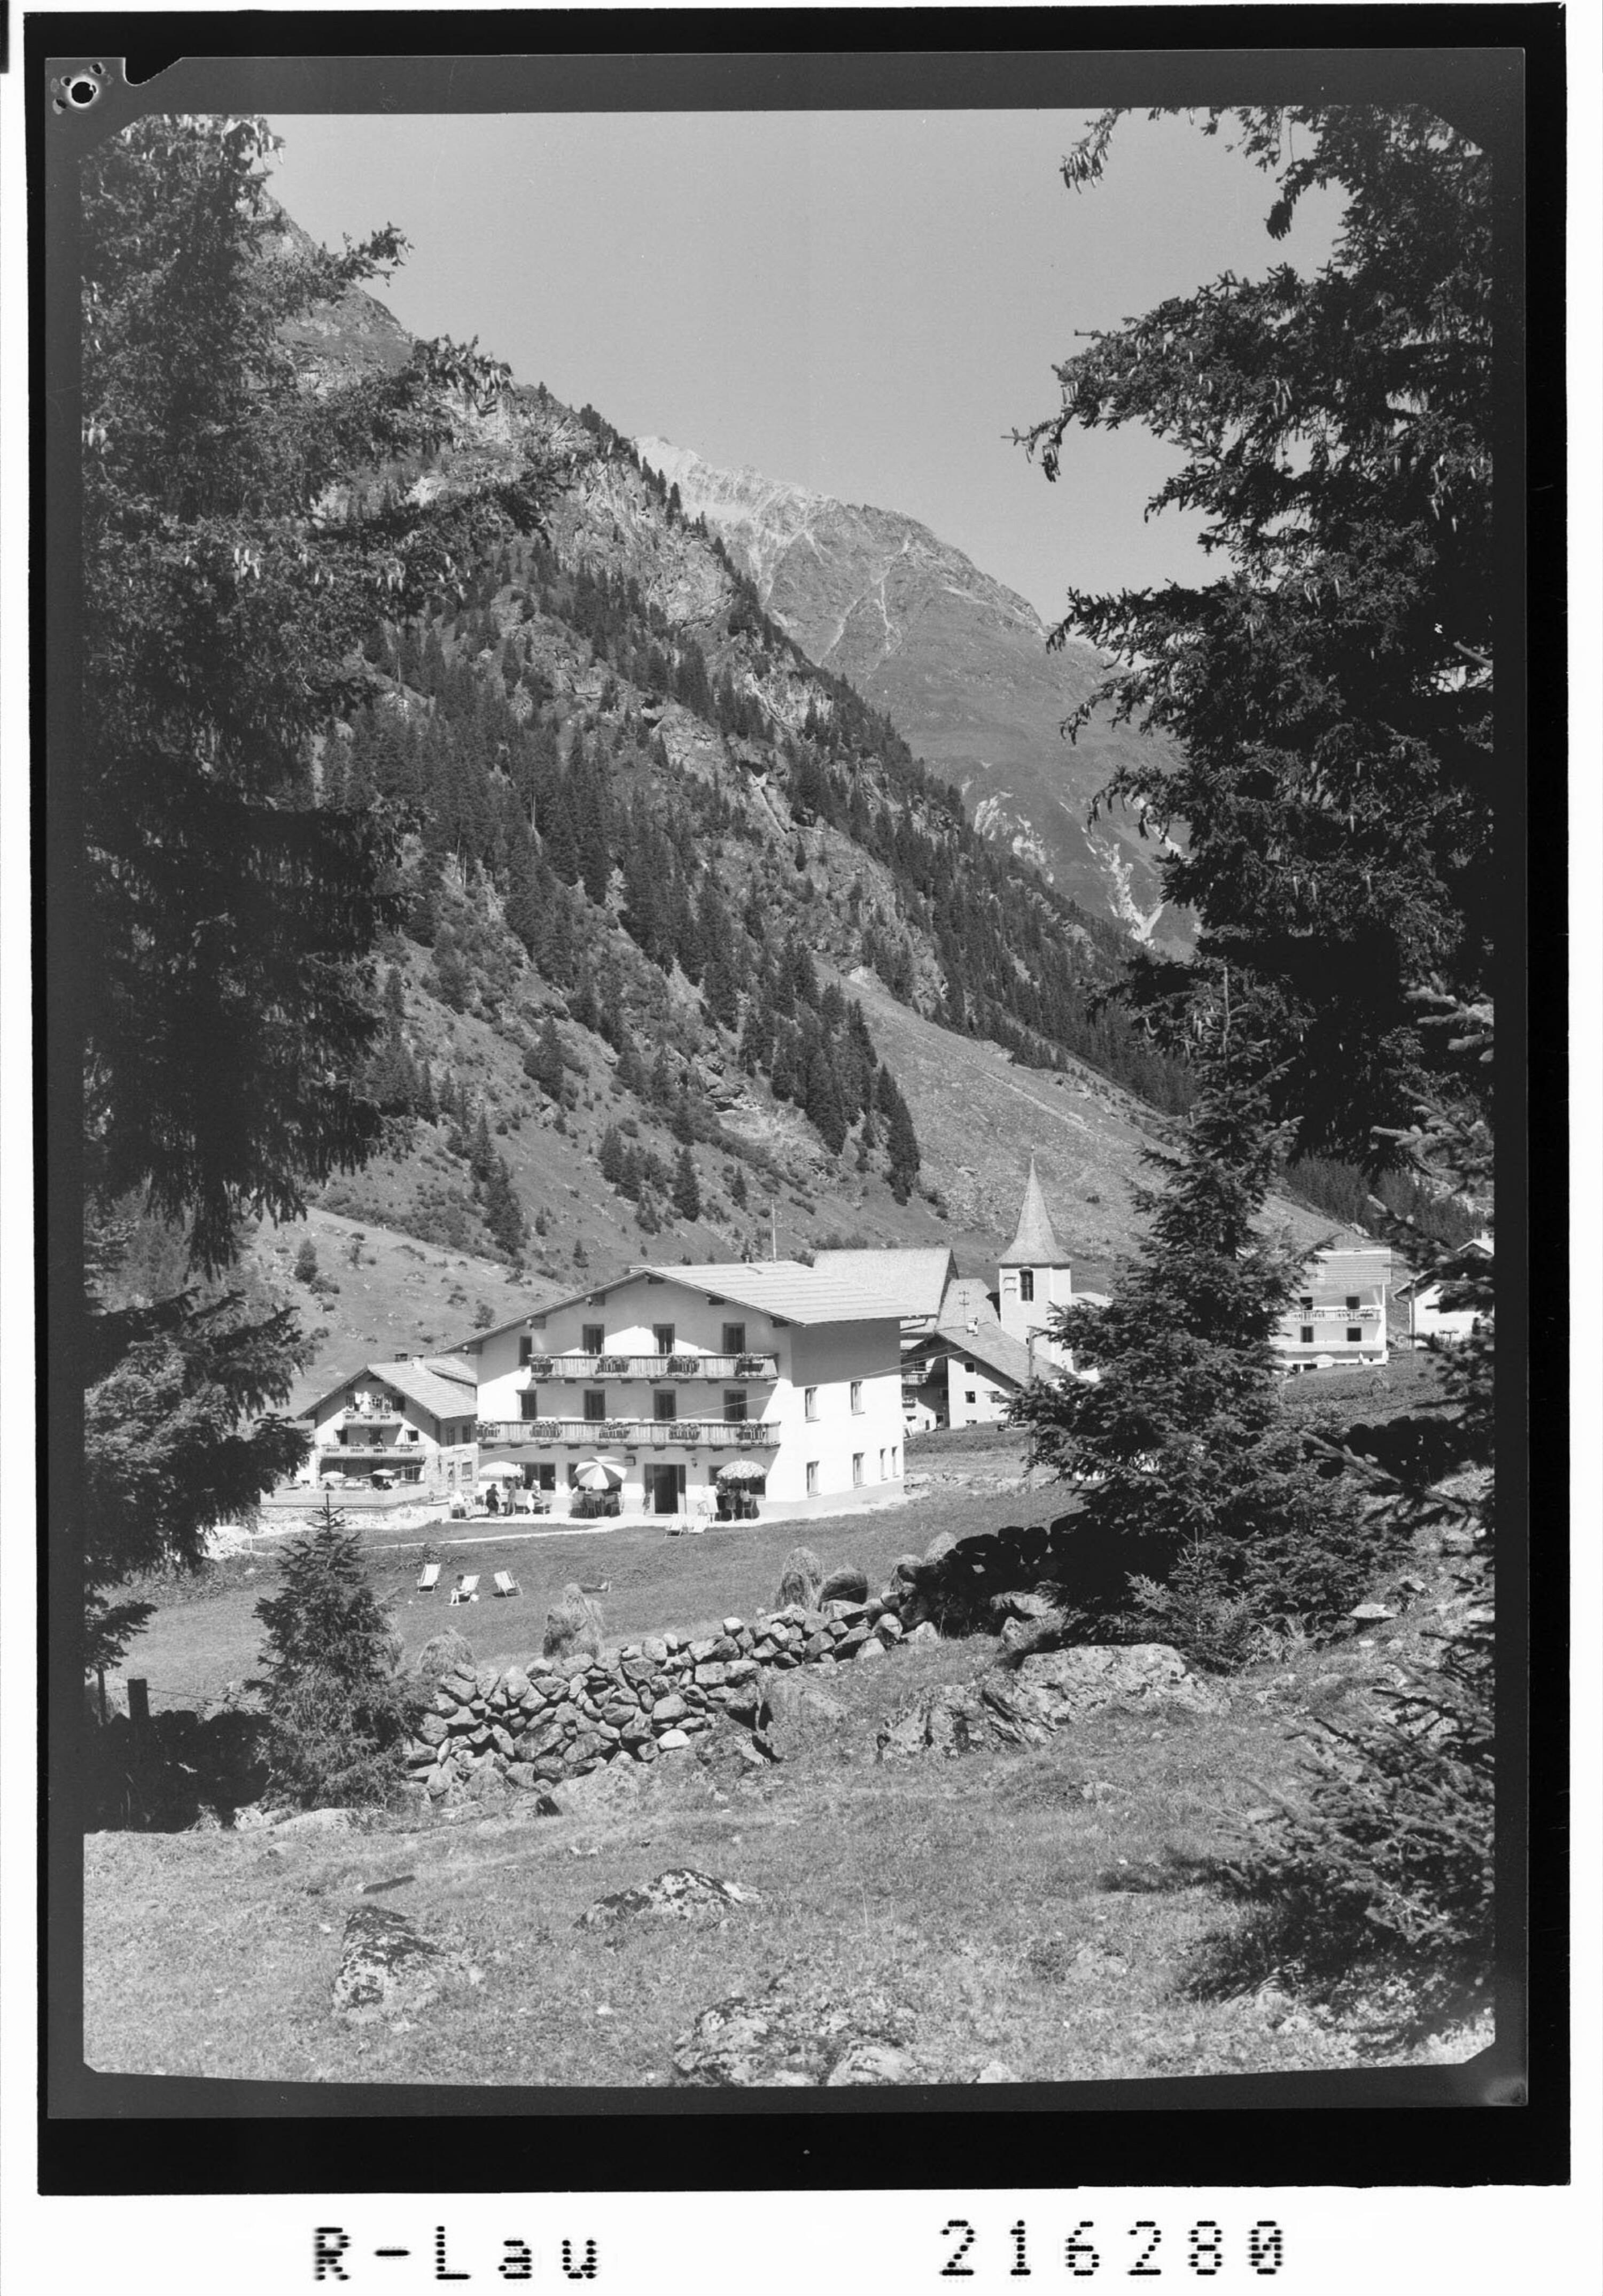 Plangeross 1617 m, Pension Sonnblick Pitztal / Tirol></div>


    <hr>
    <div class=